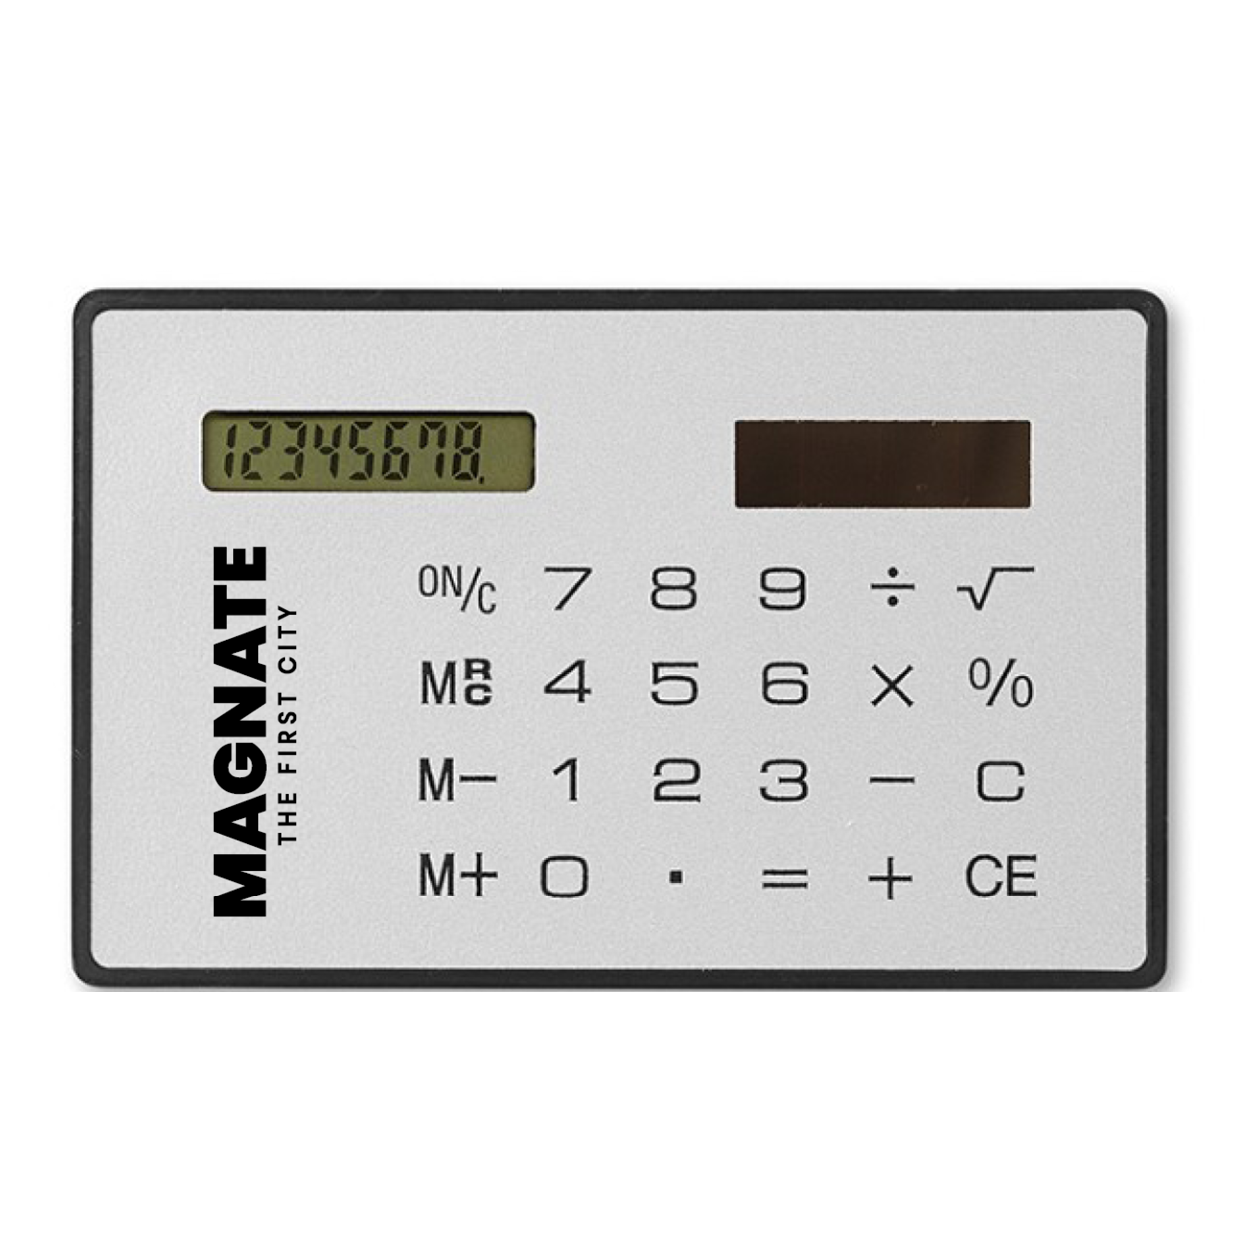 Magnate branded calculator